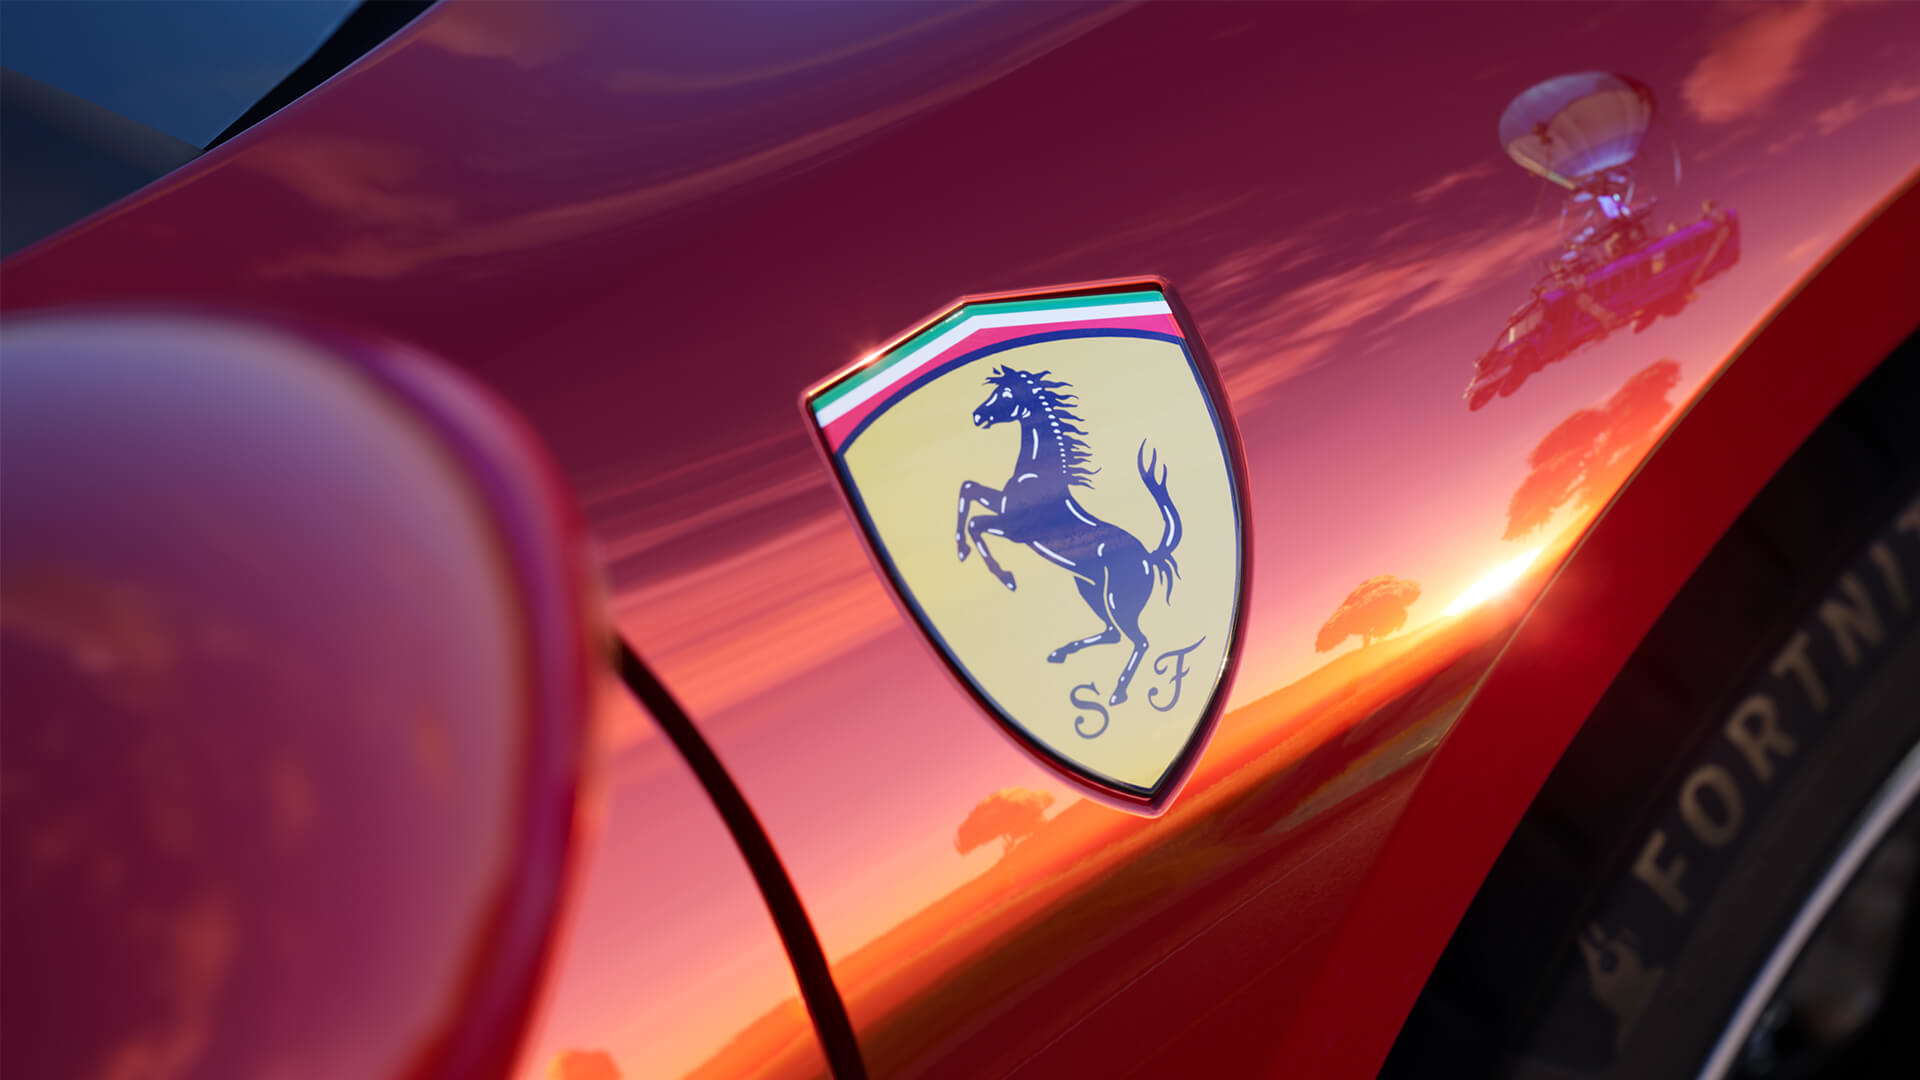 Fortnite Ferrari 296 GTB Wallpaper, HD Games 4K Wallpapers, Images, Photos  and Background - Wallpapers Den